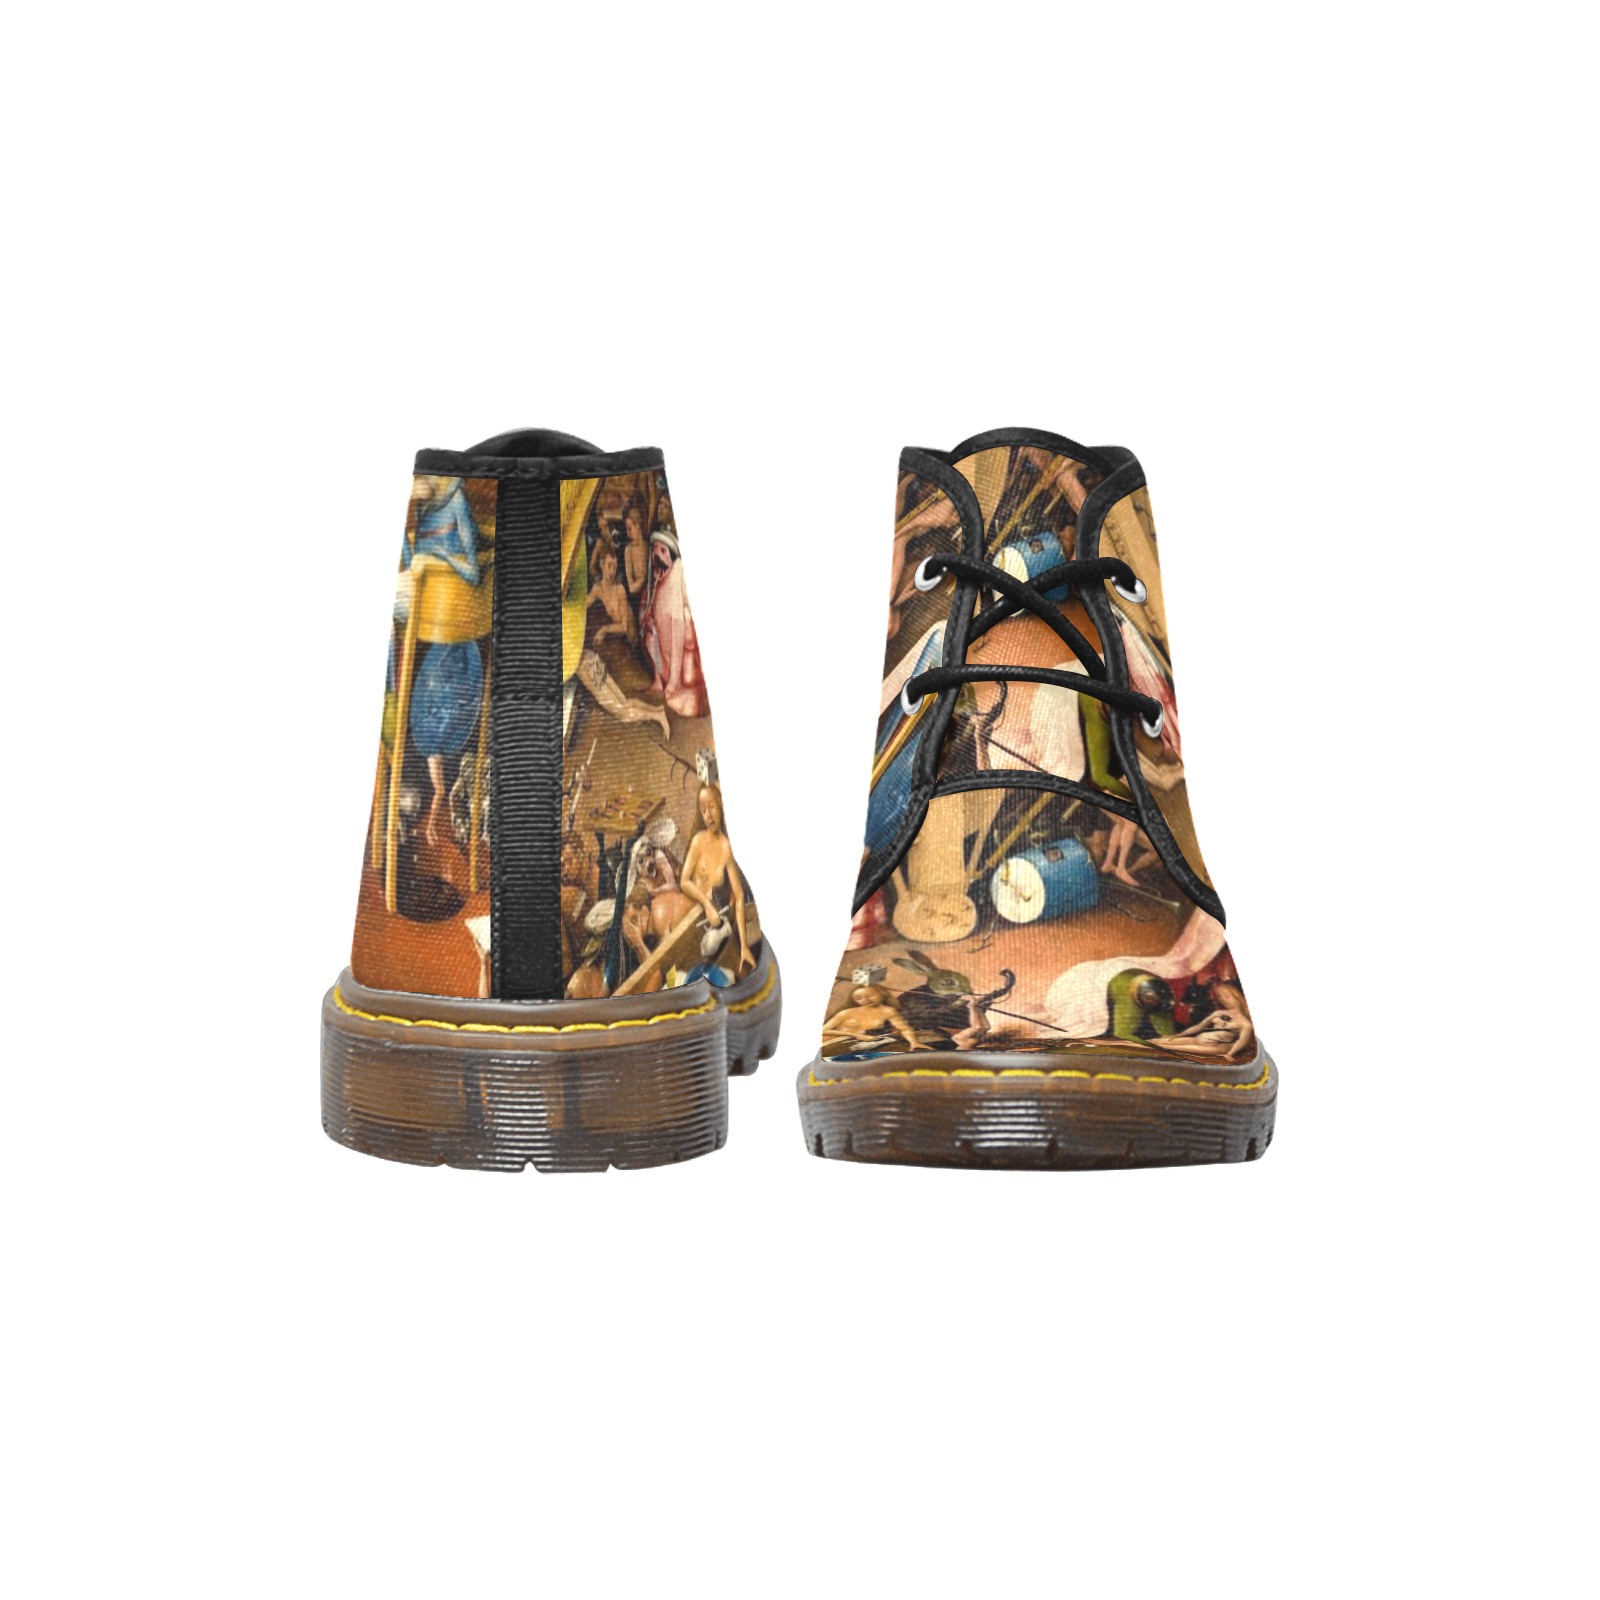 Garden of Earthly Delights 3 Women's Canvas Chukka Boots (Model 2402-1)